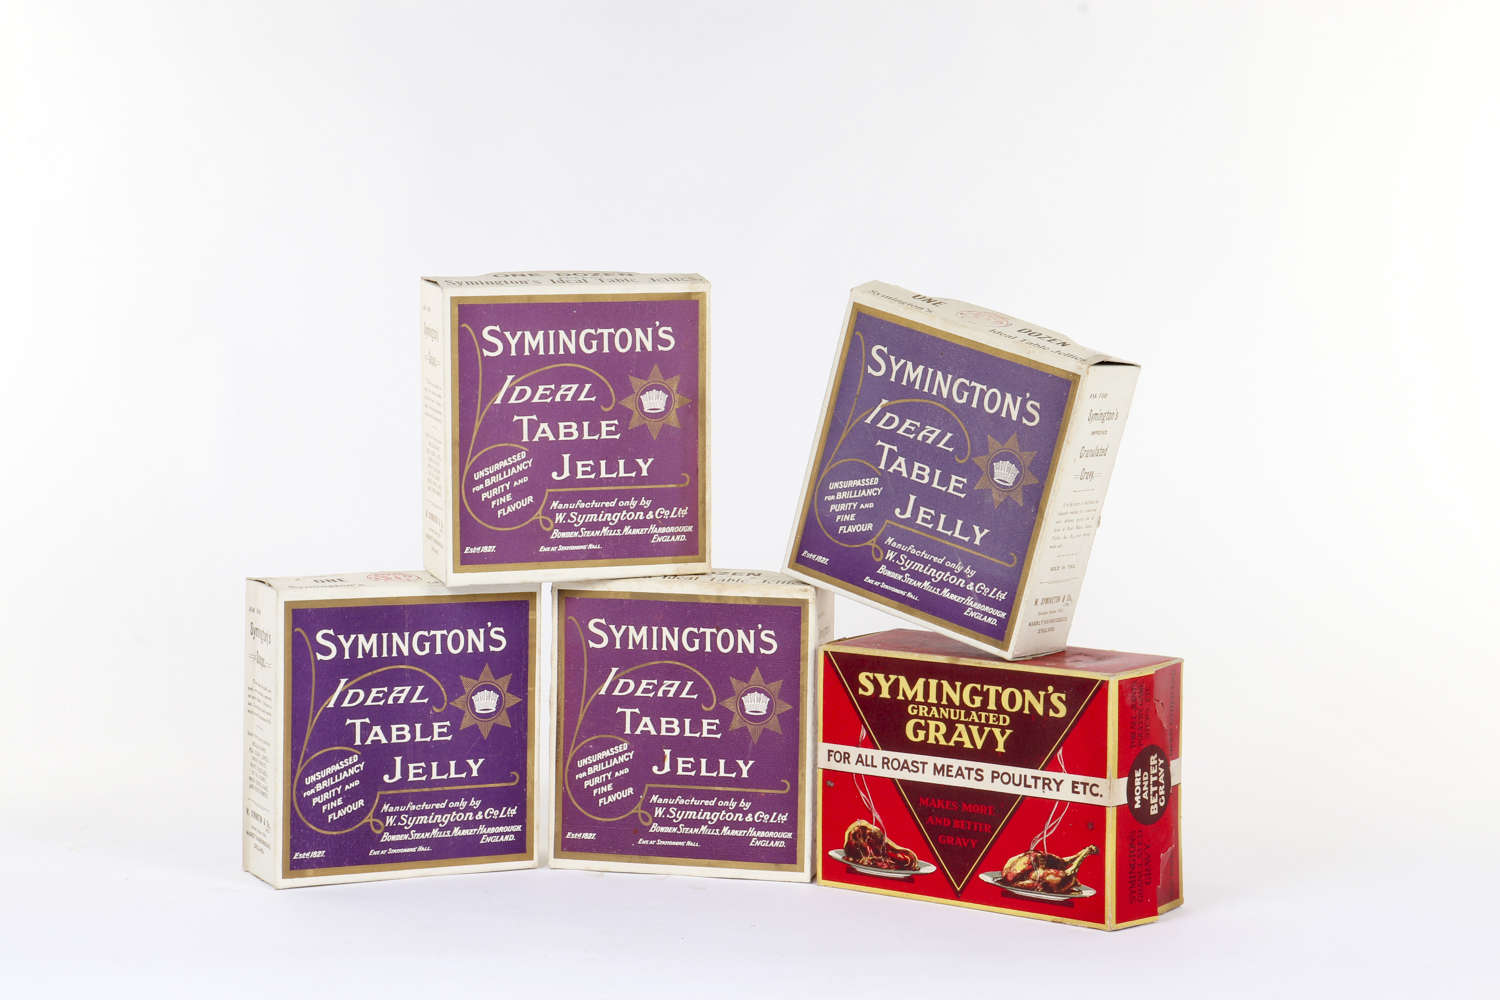 'Symington's' dummy packaging